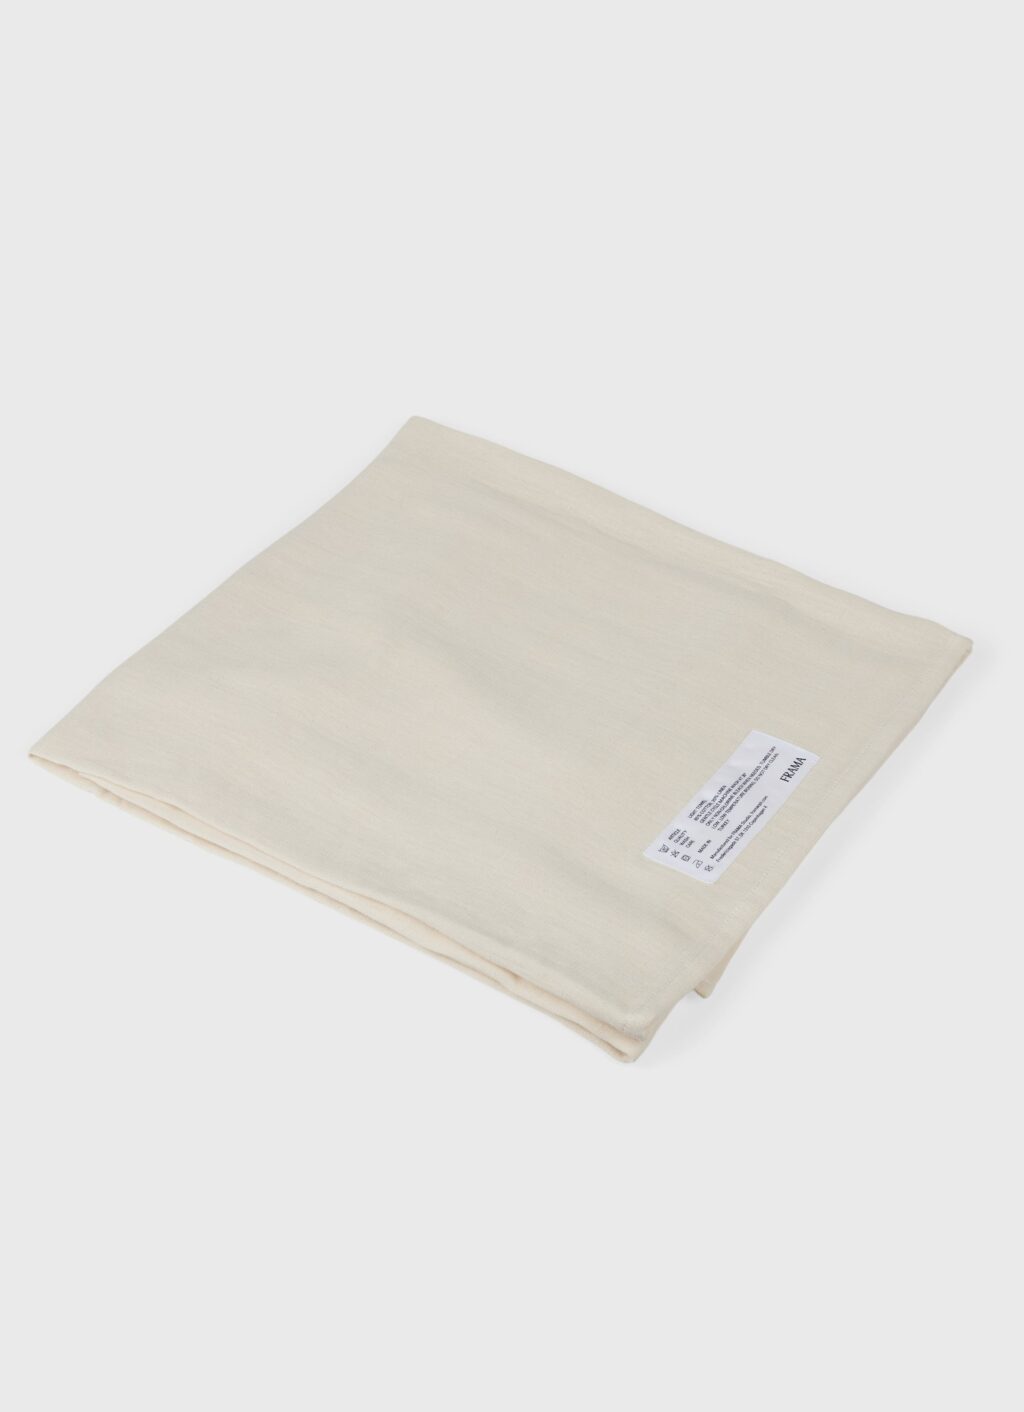 Frama - Light Towel - Bone White - Bath Sheet